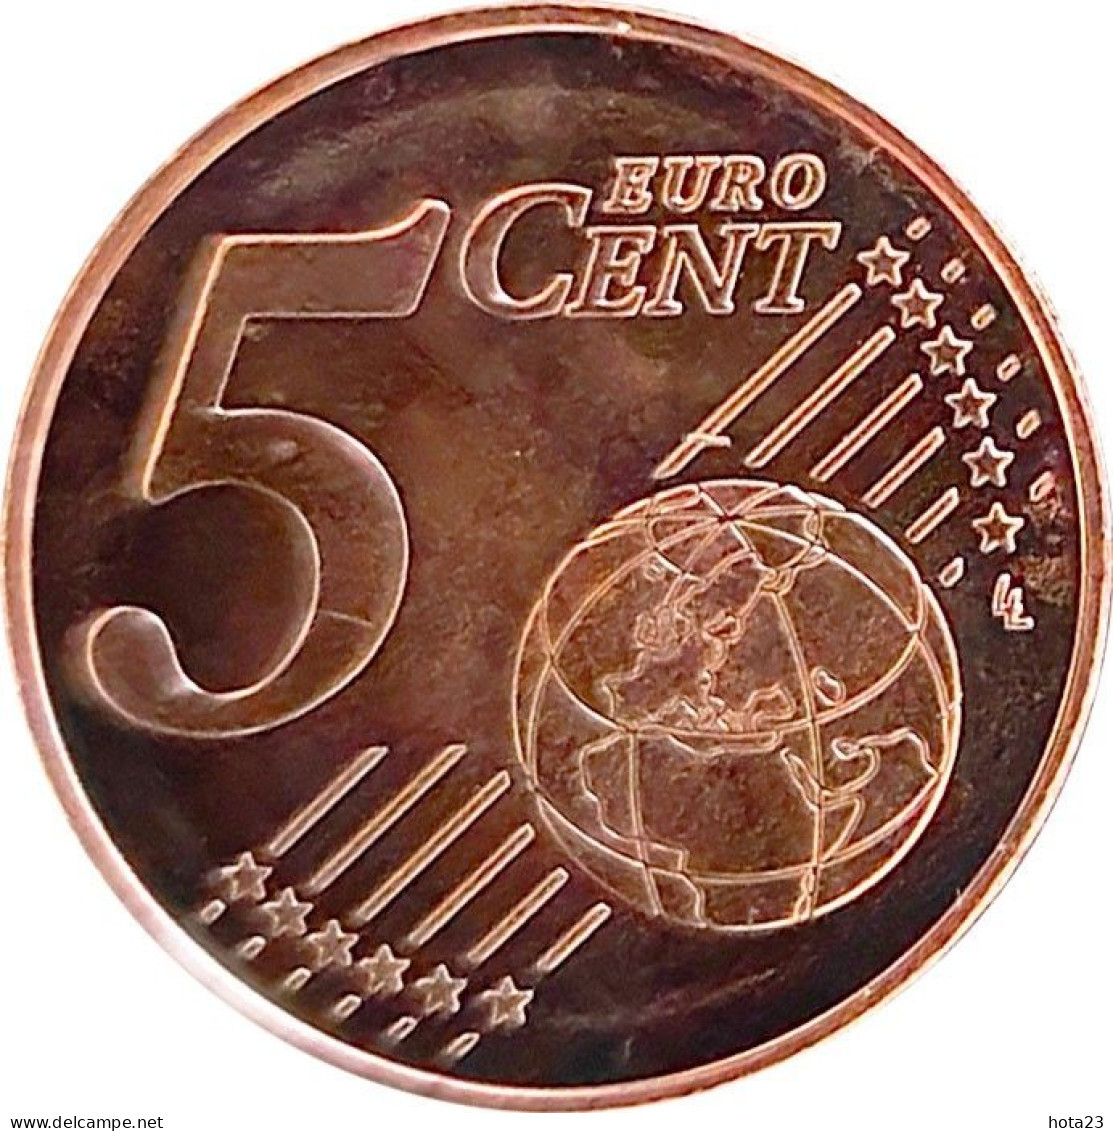 Lithuania , Lietuva , Litauen  2023 5 Euro Cent Coin  UNC From Roll - Lithuania